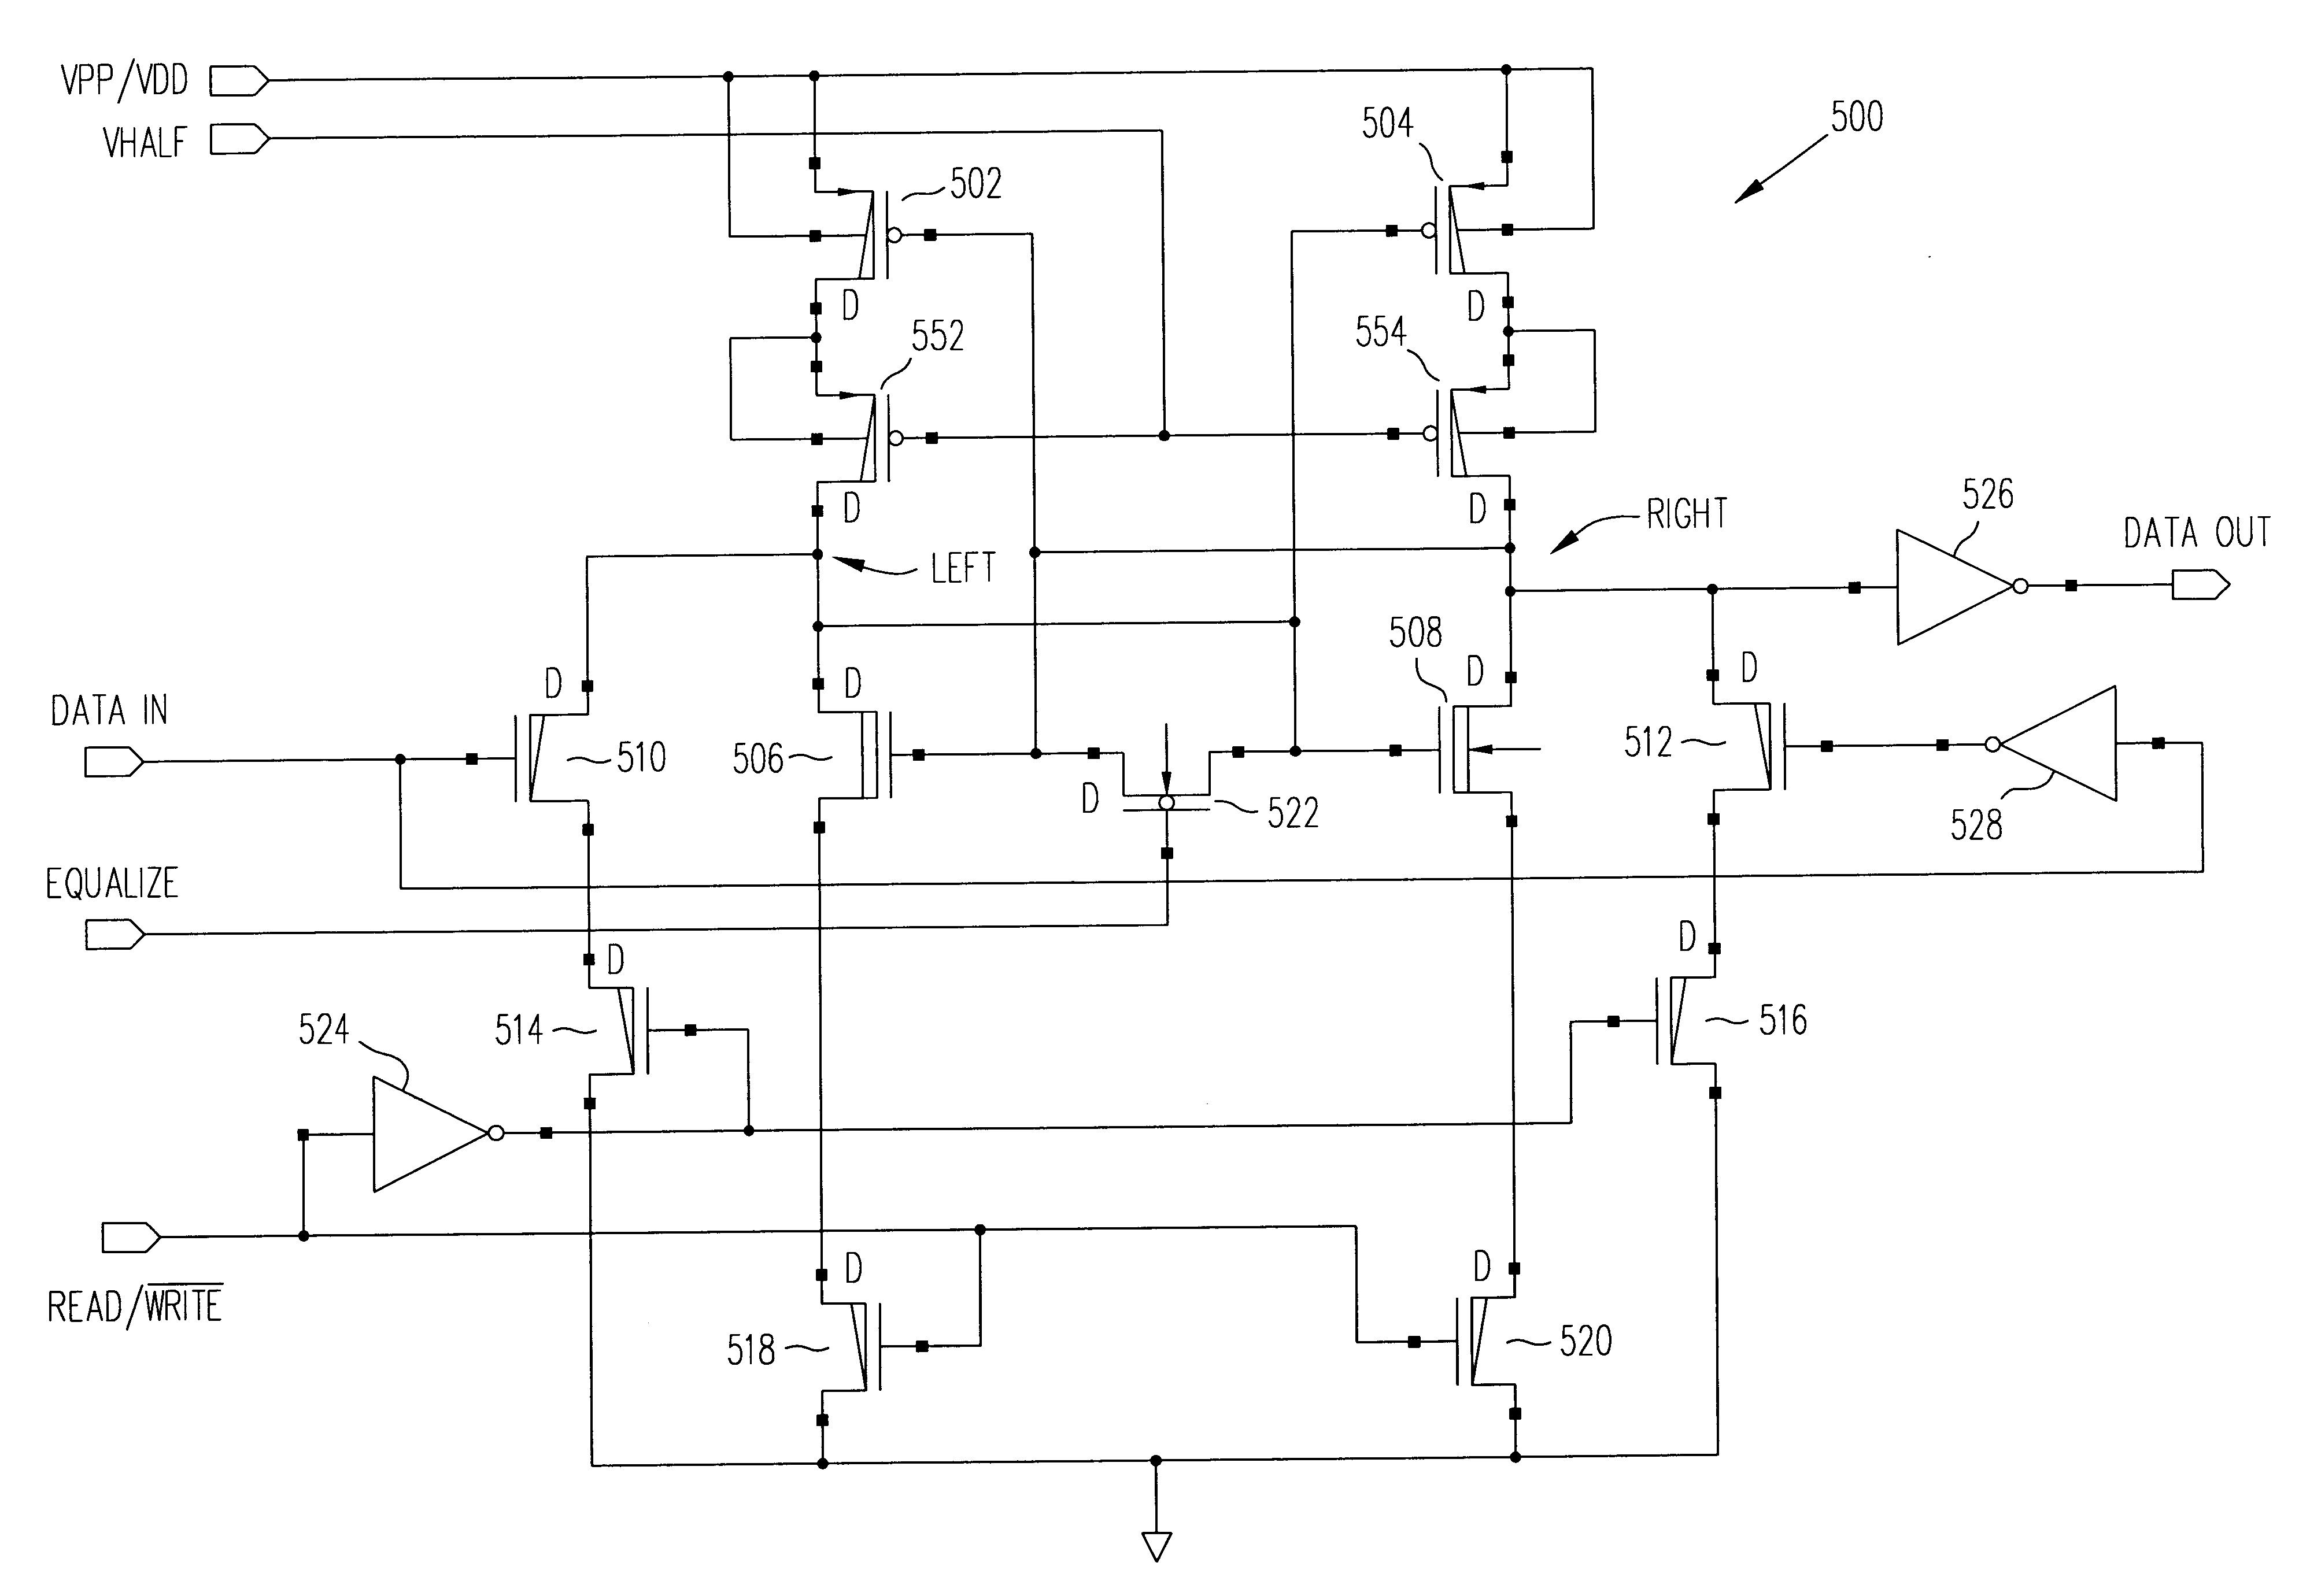 Non-volatile latch circuit that has minimal control circuitry